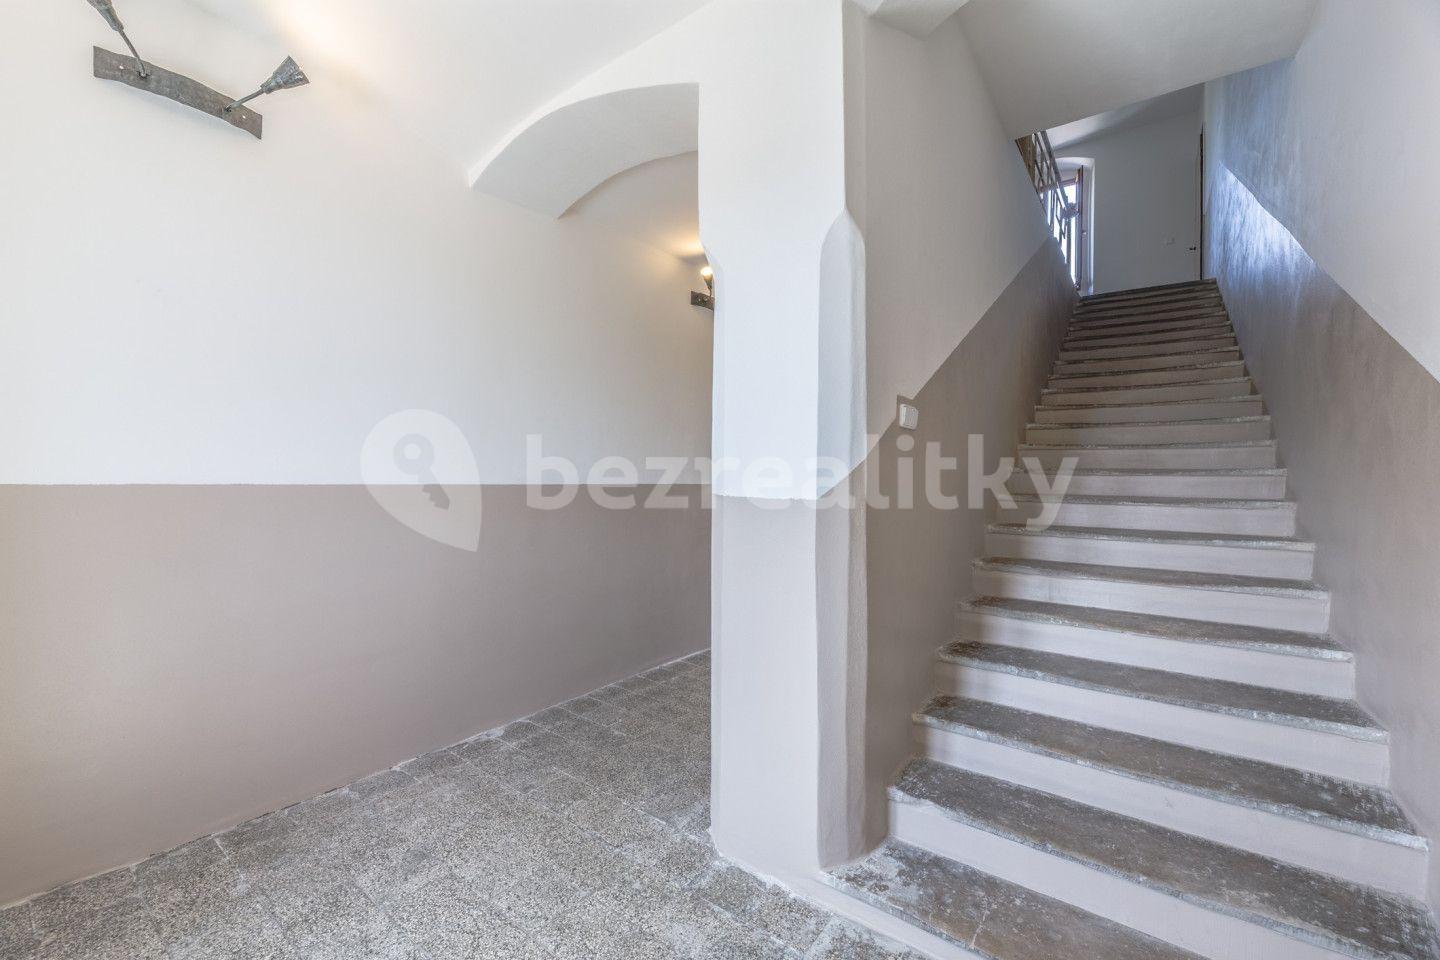 2 bedroom flat for sale, 60 m², Snědovice, Ústecký Region